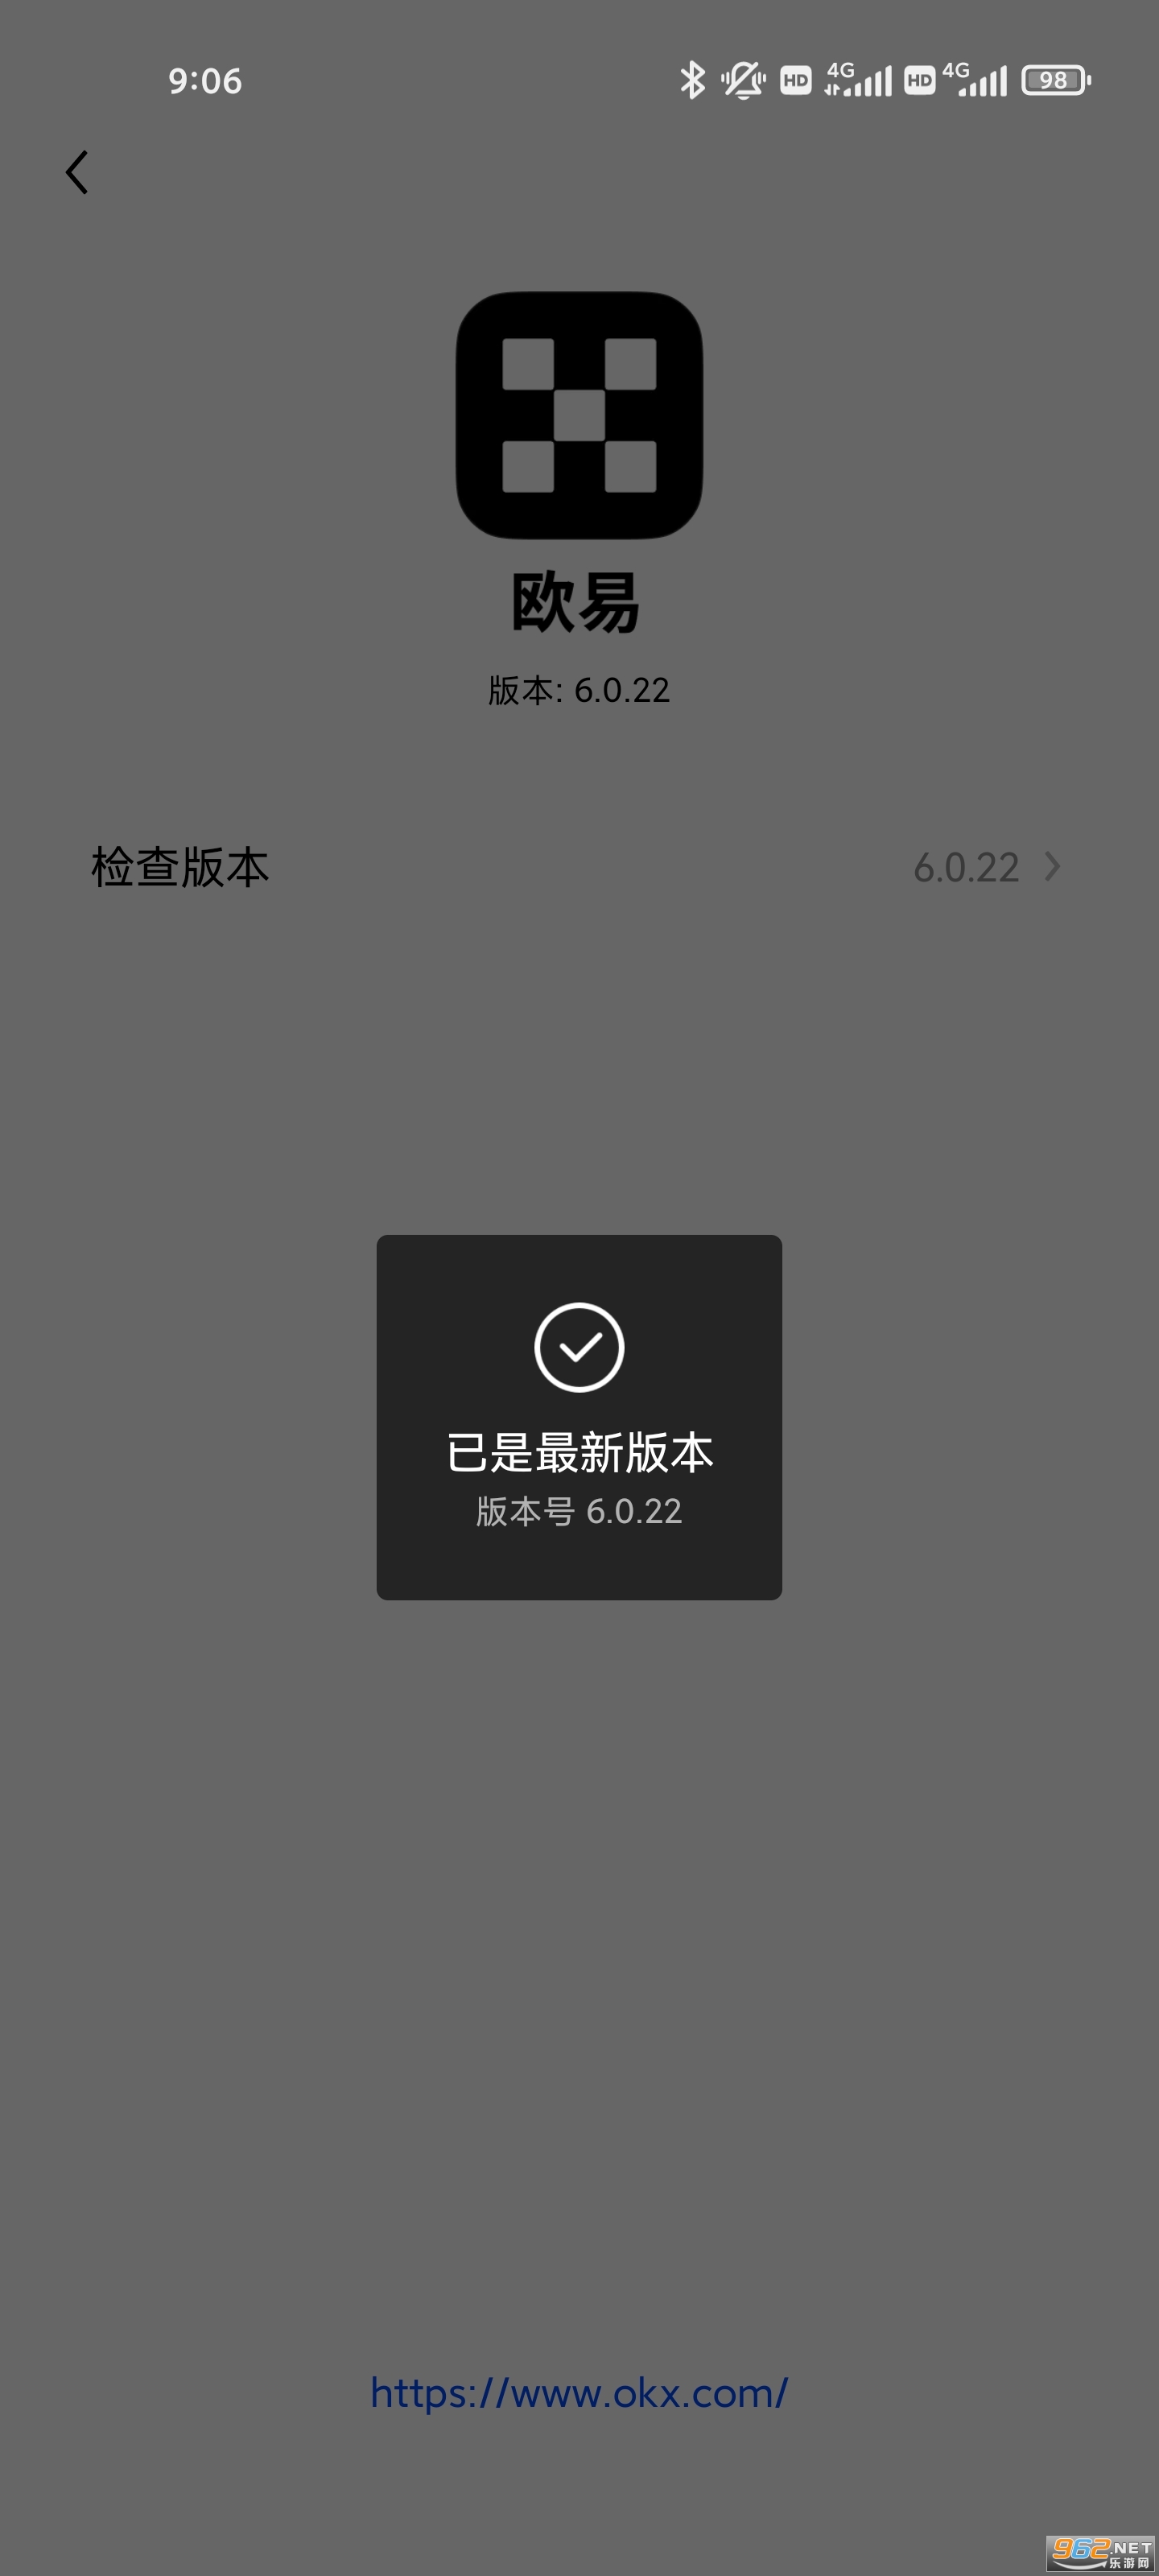 okex交易app v6.0.22官方版